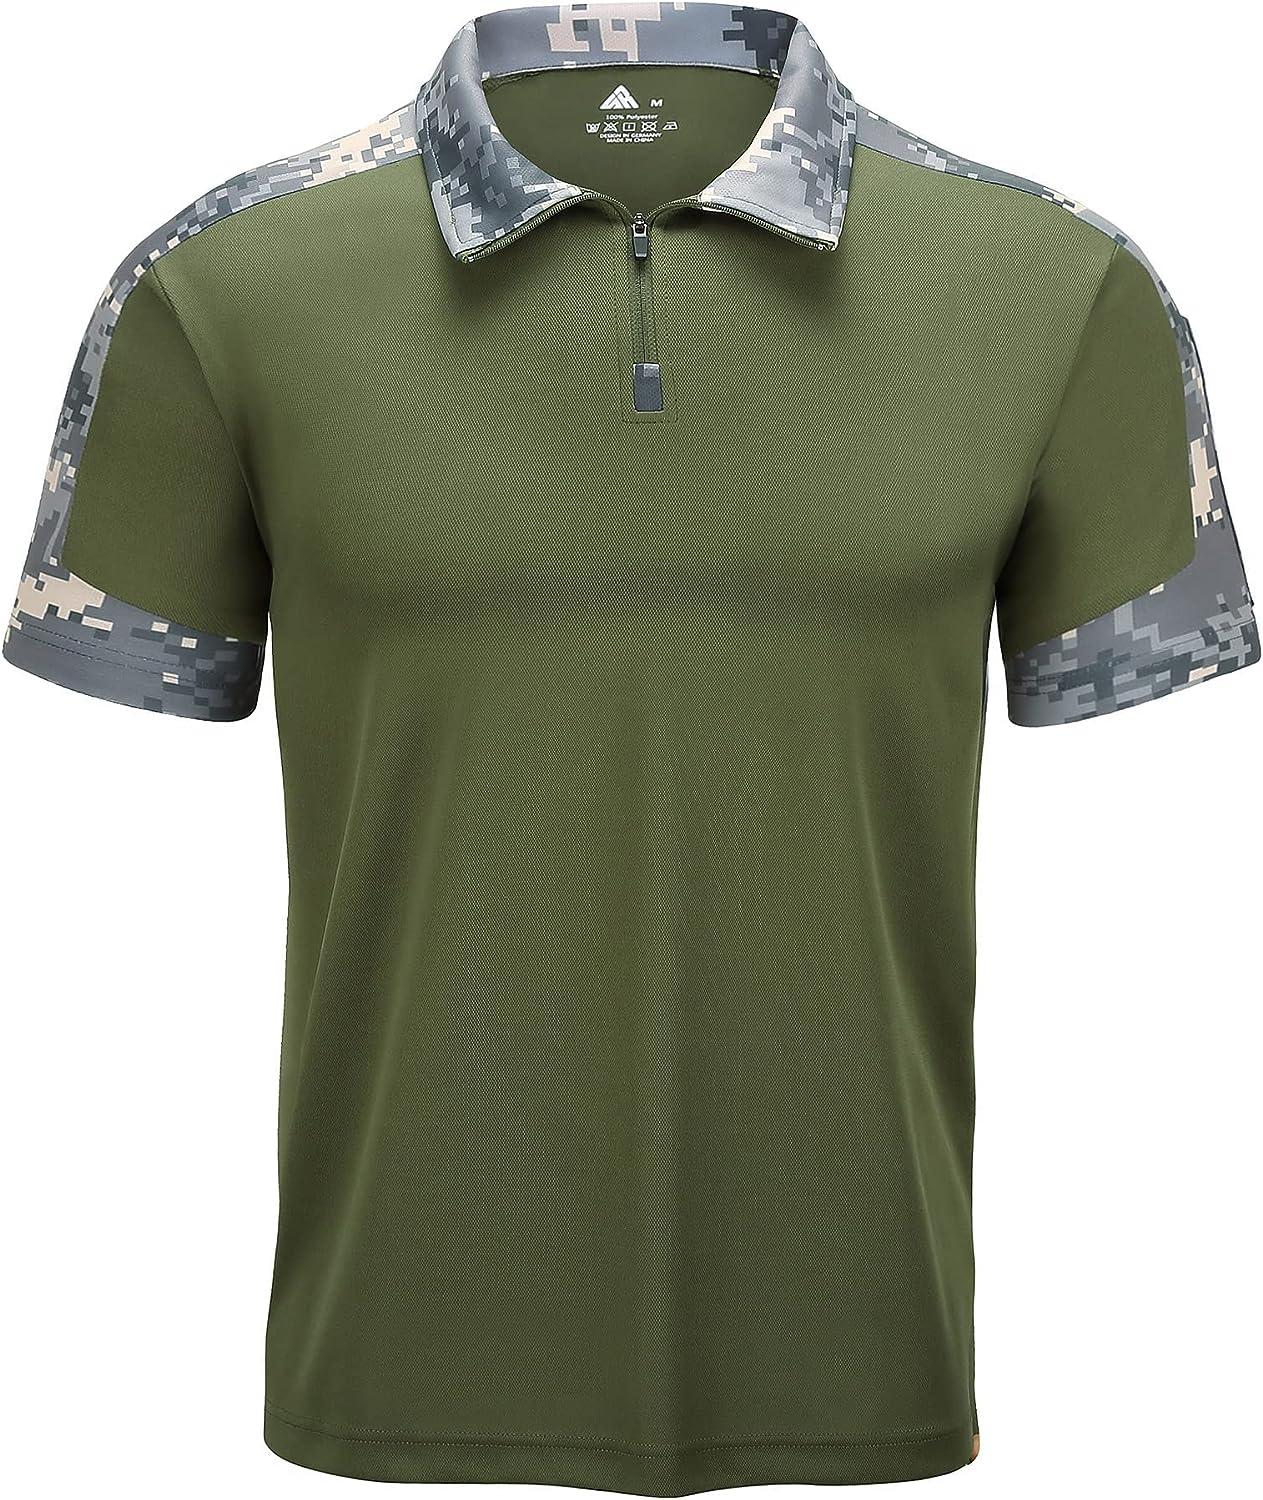  Men Army Tactical Military Shirt Men Short Sleeve